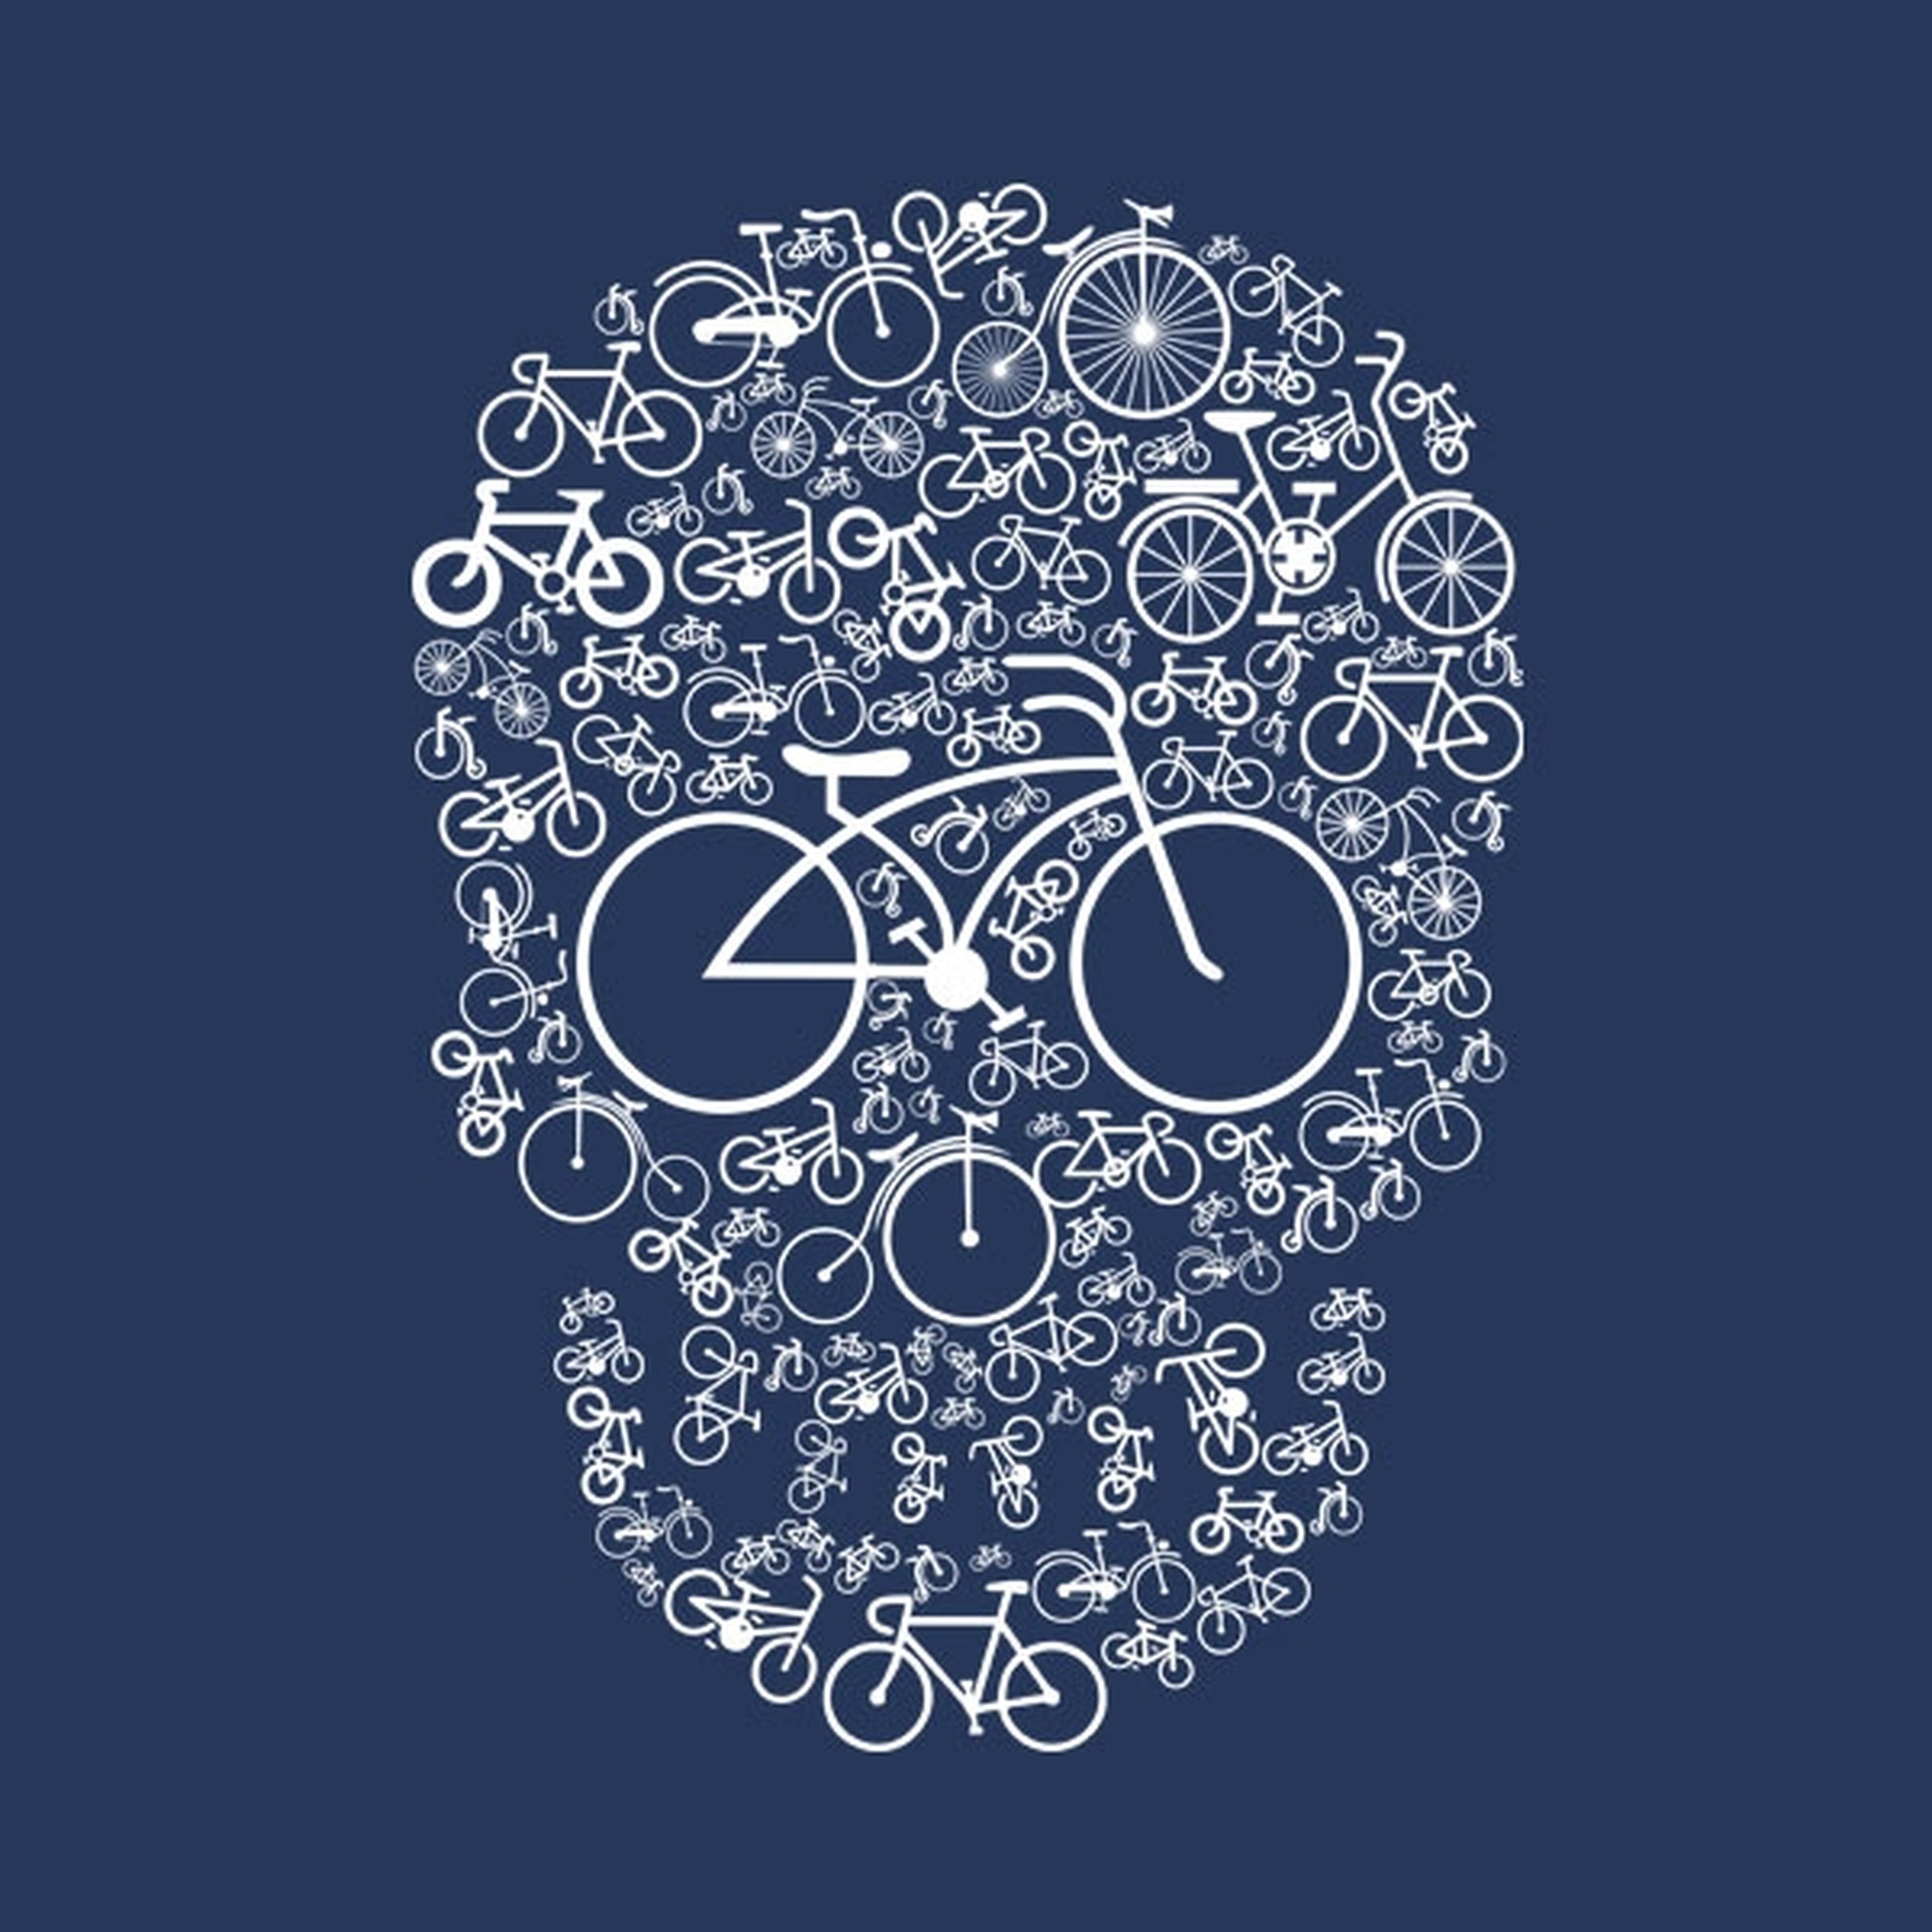 Bicycle Skull - T-shirt